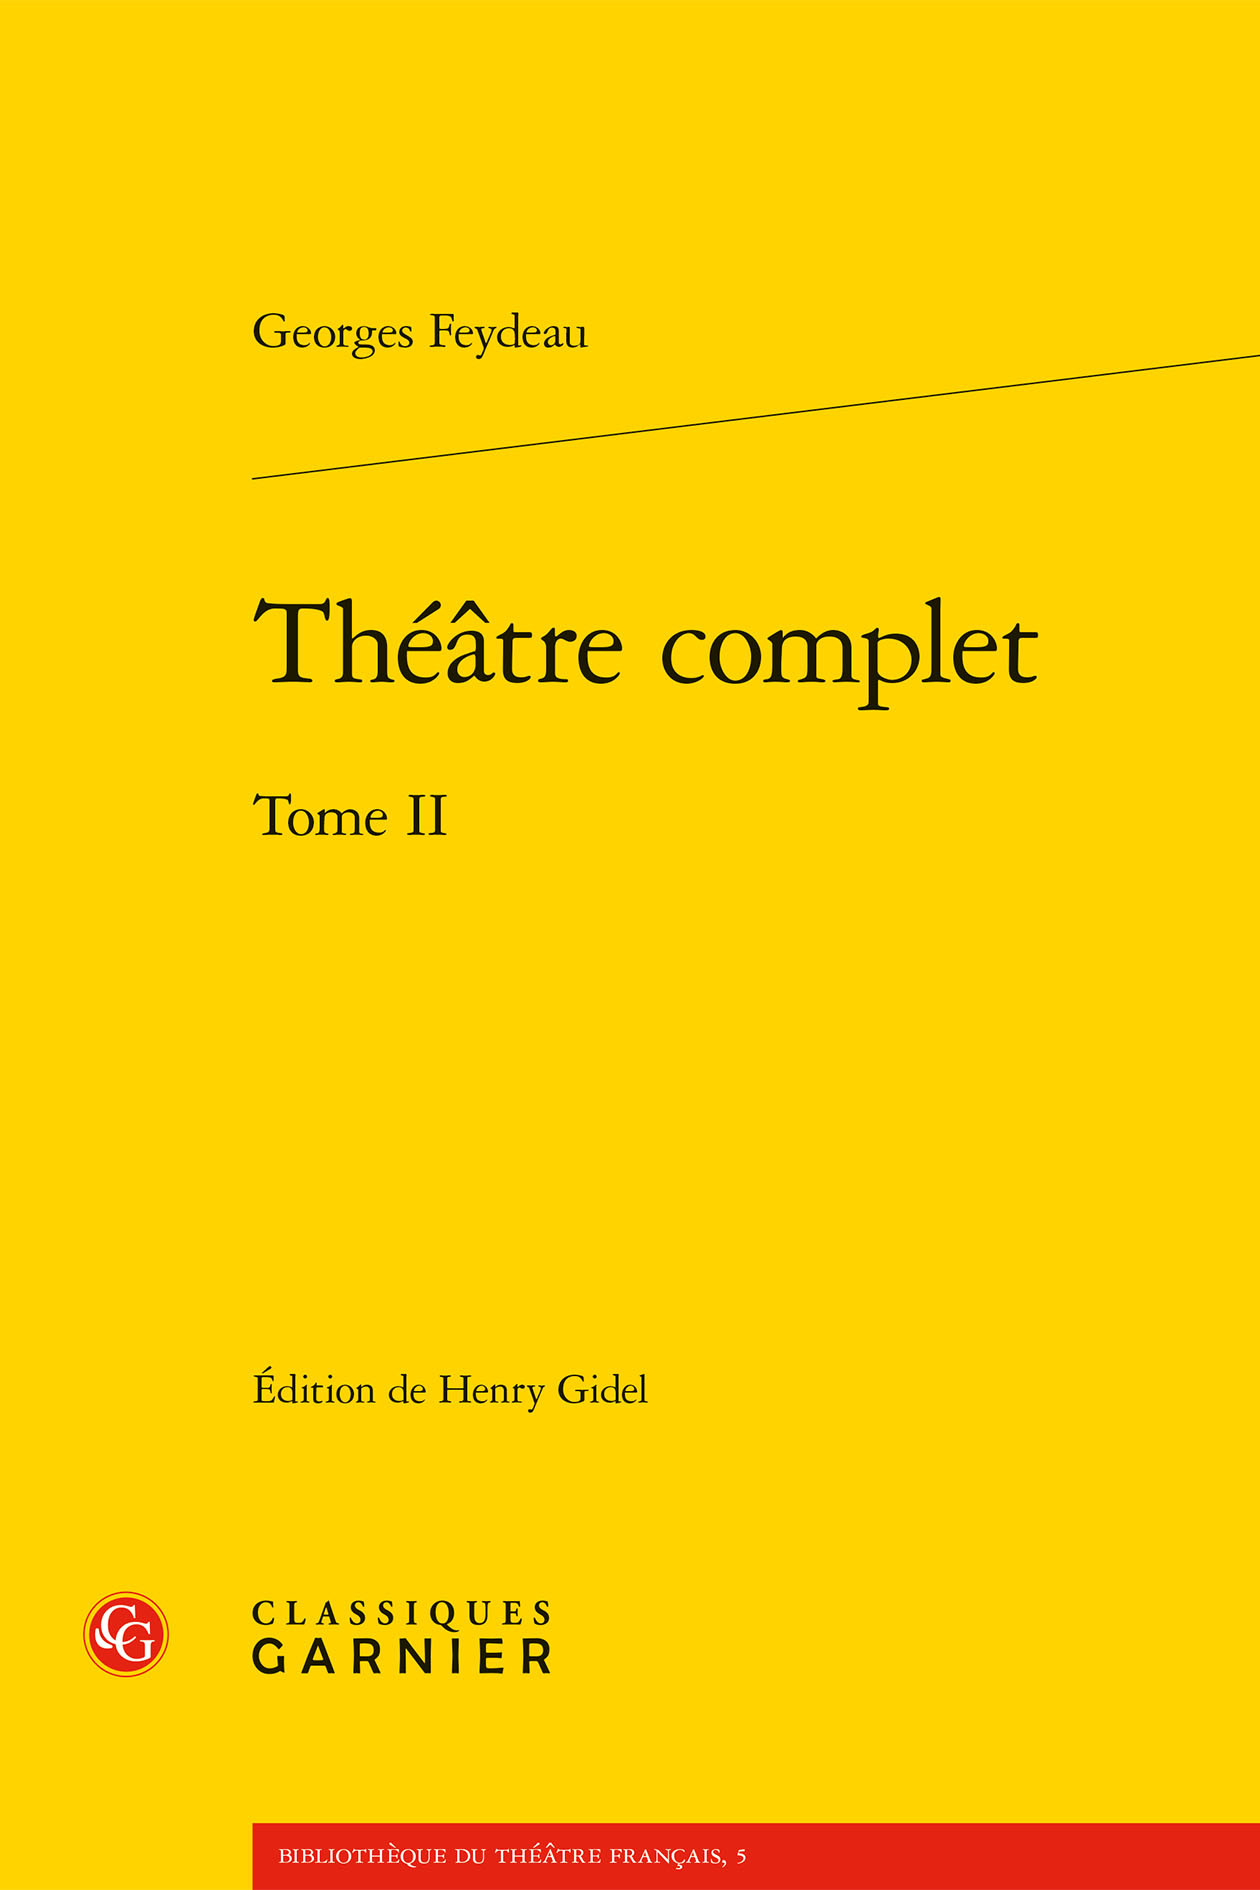 Théâtre complet (9782812402500-front-cover)